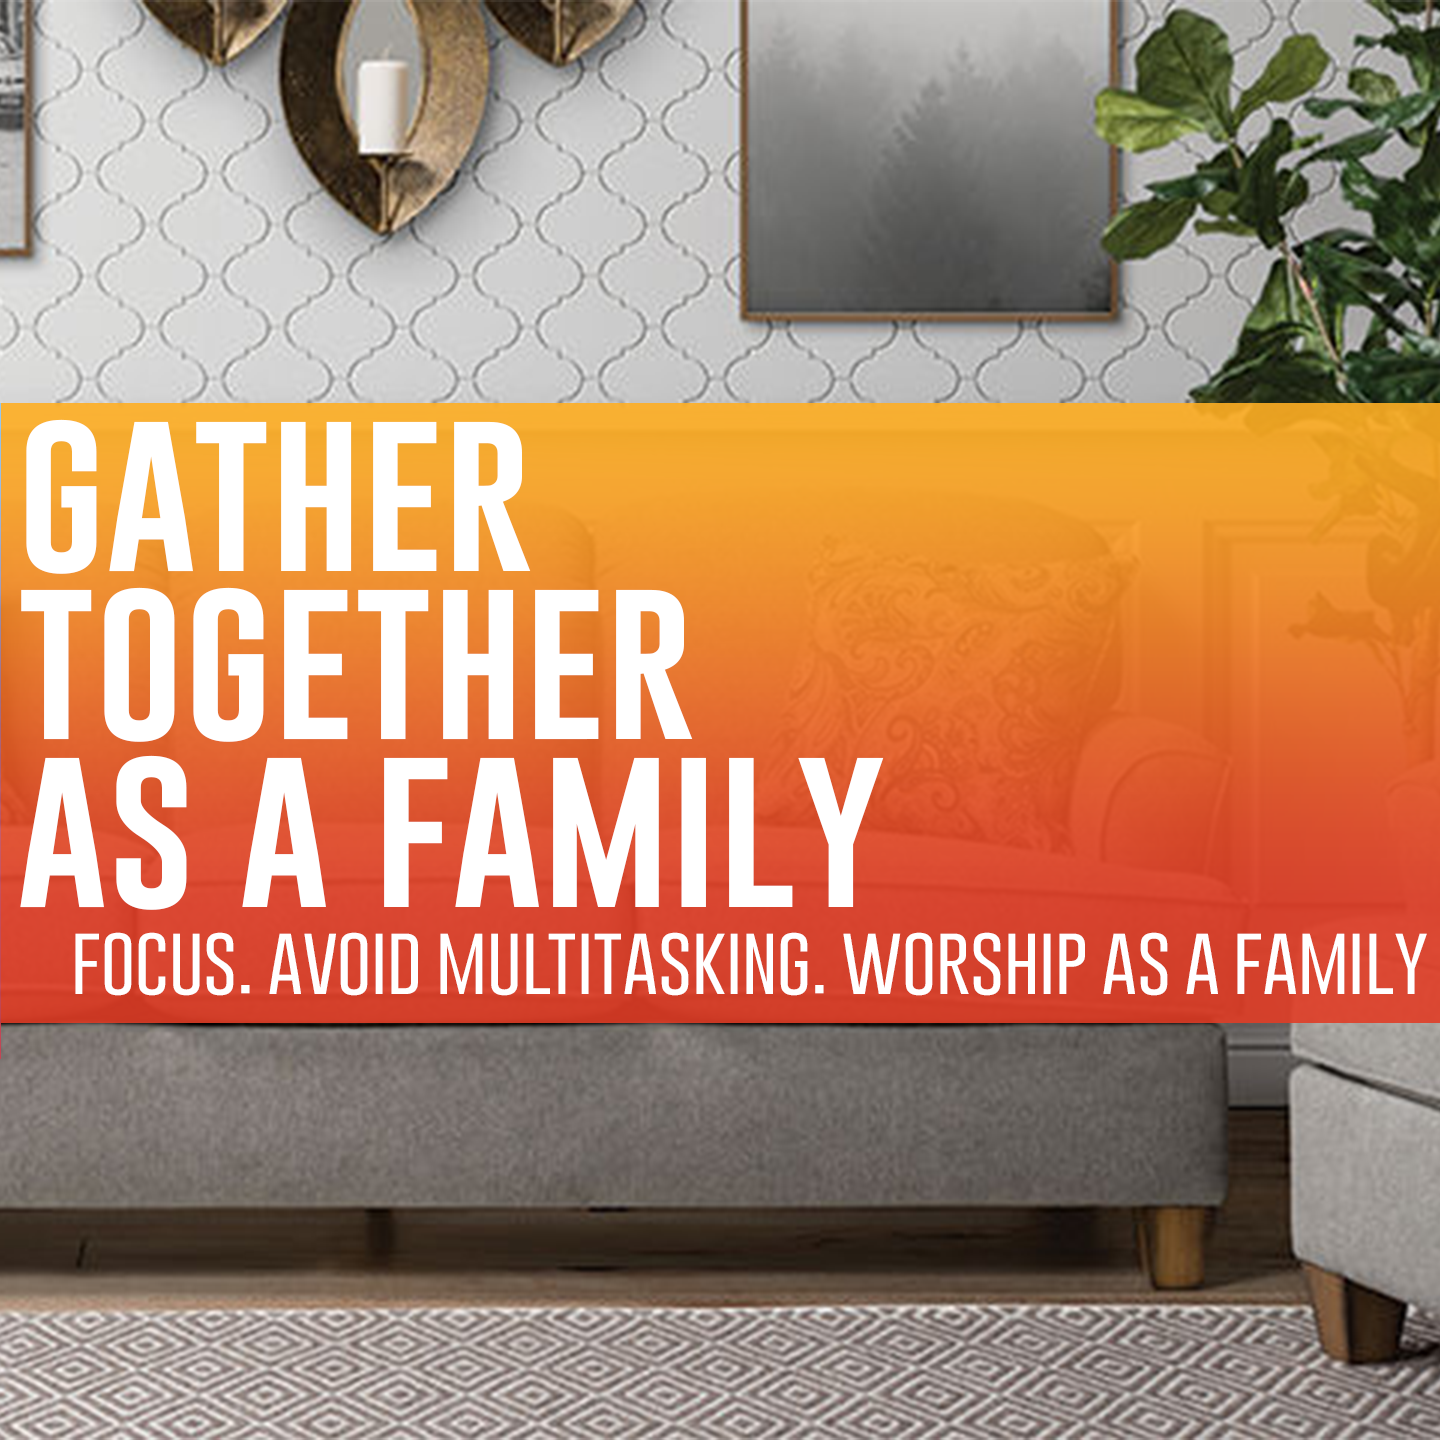 Family worship at home